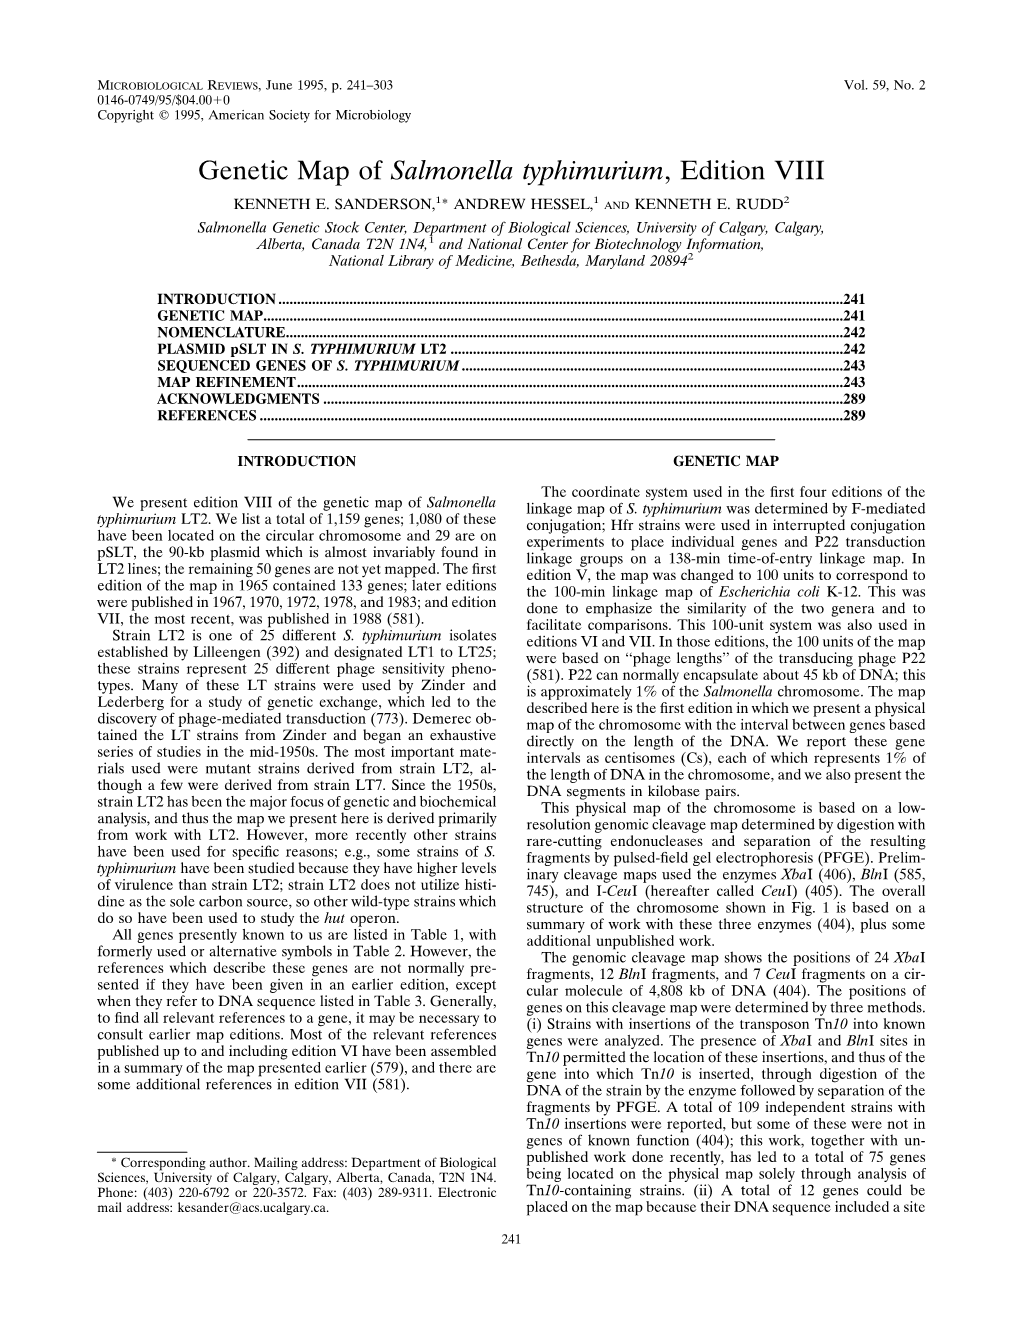 Genetic Map of Salmonella Typhimurium, Edition VIII